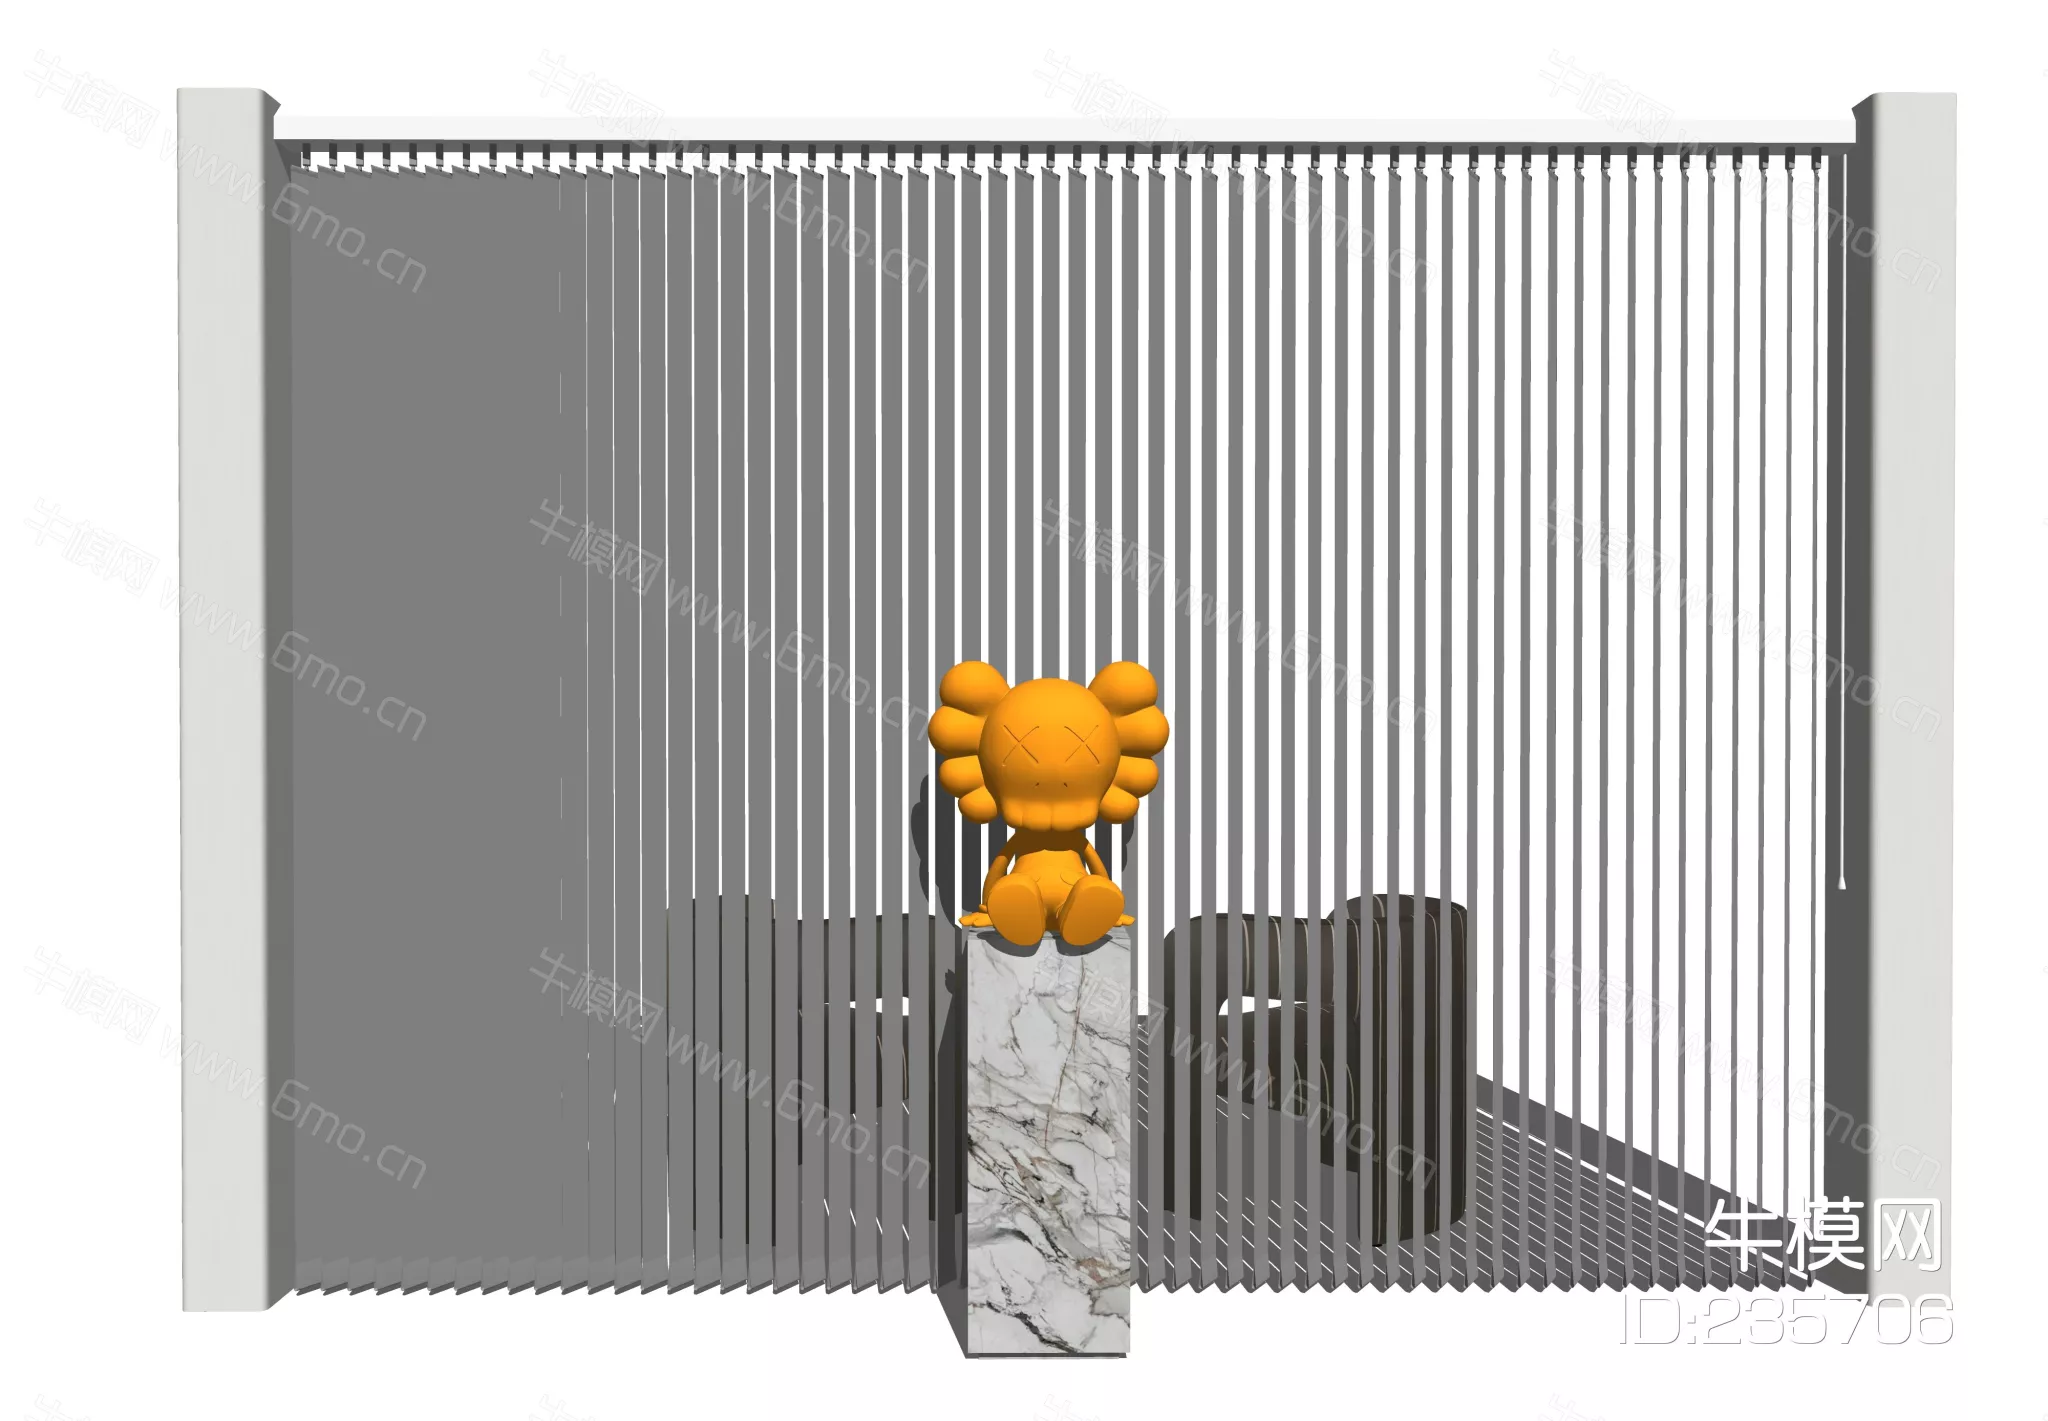 MODERN CURTAIN - SKETCHUP 3D MODEL - ENSCAPE - 235706